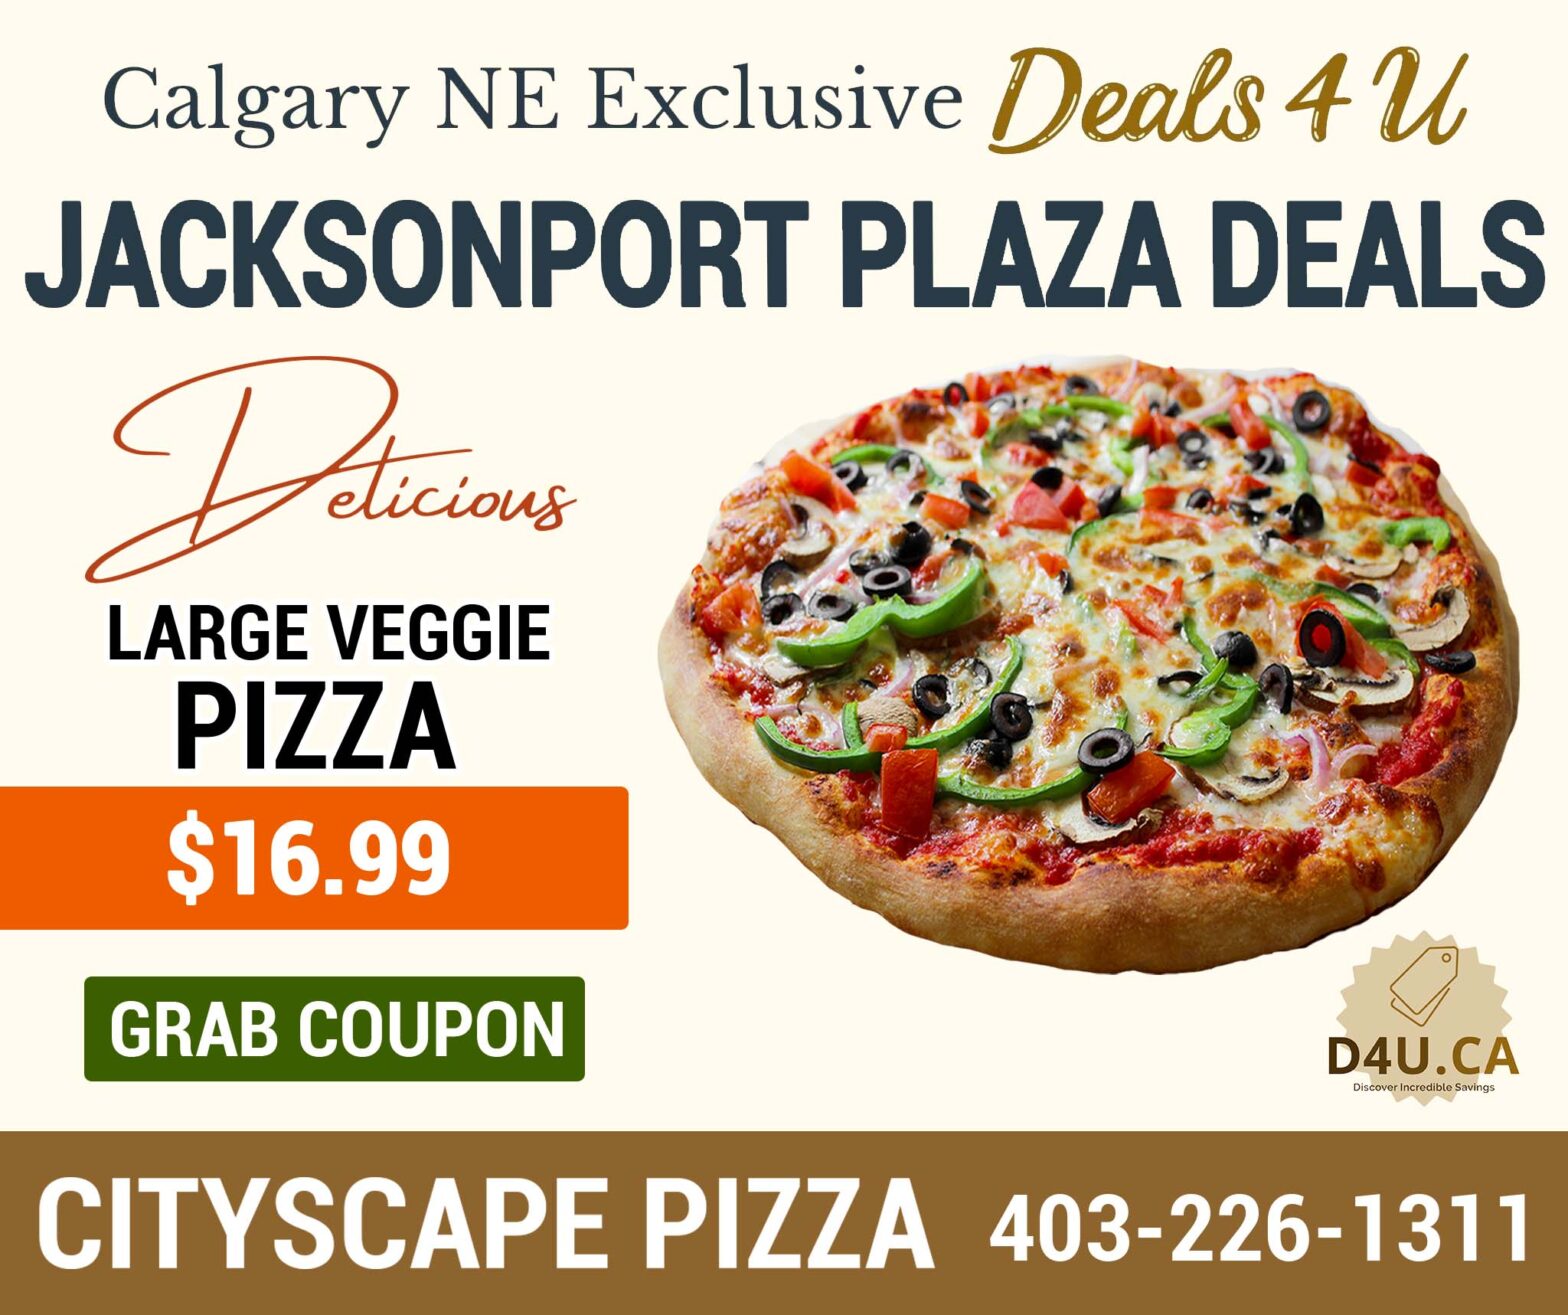 Veggie Pizza Large – $16.99 | Business Deal | d4u.ca